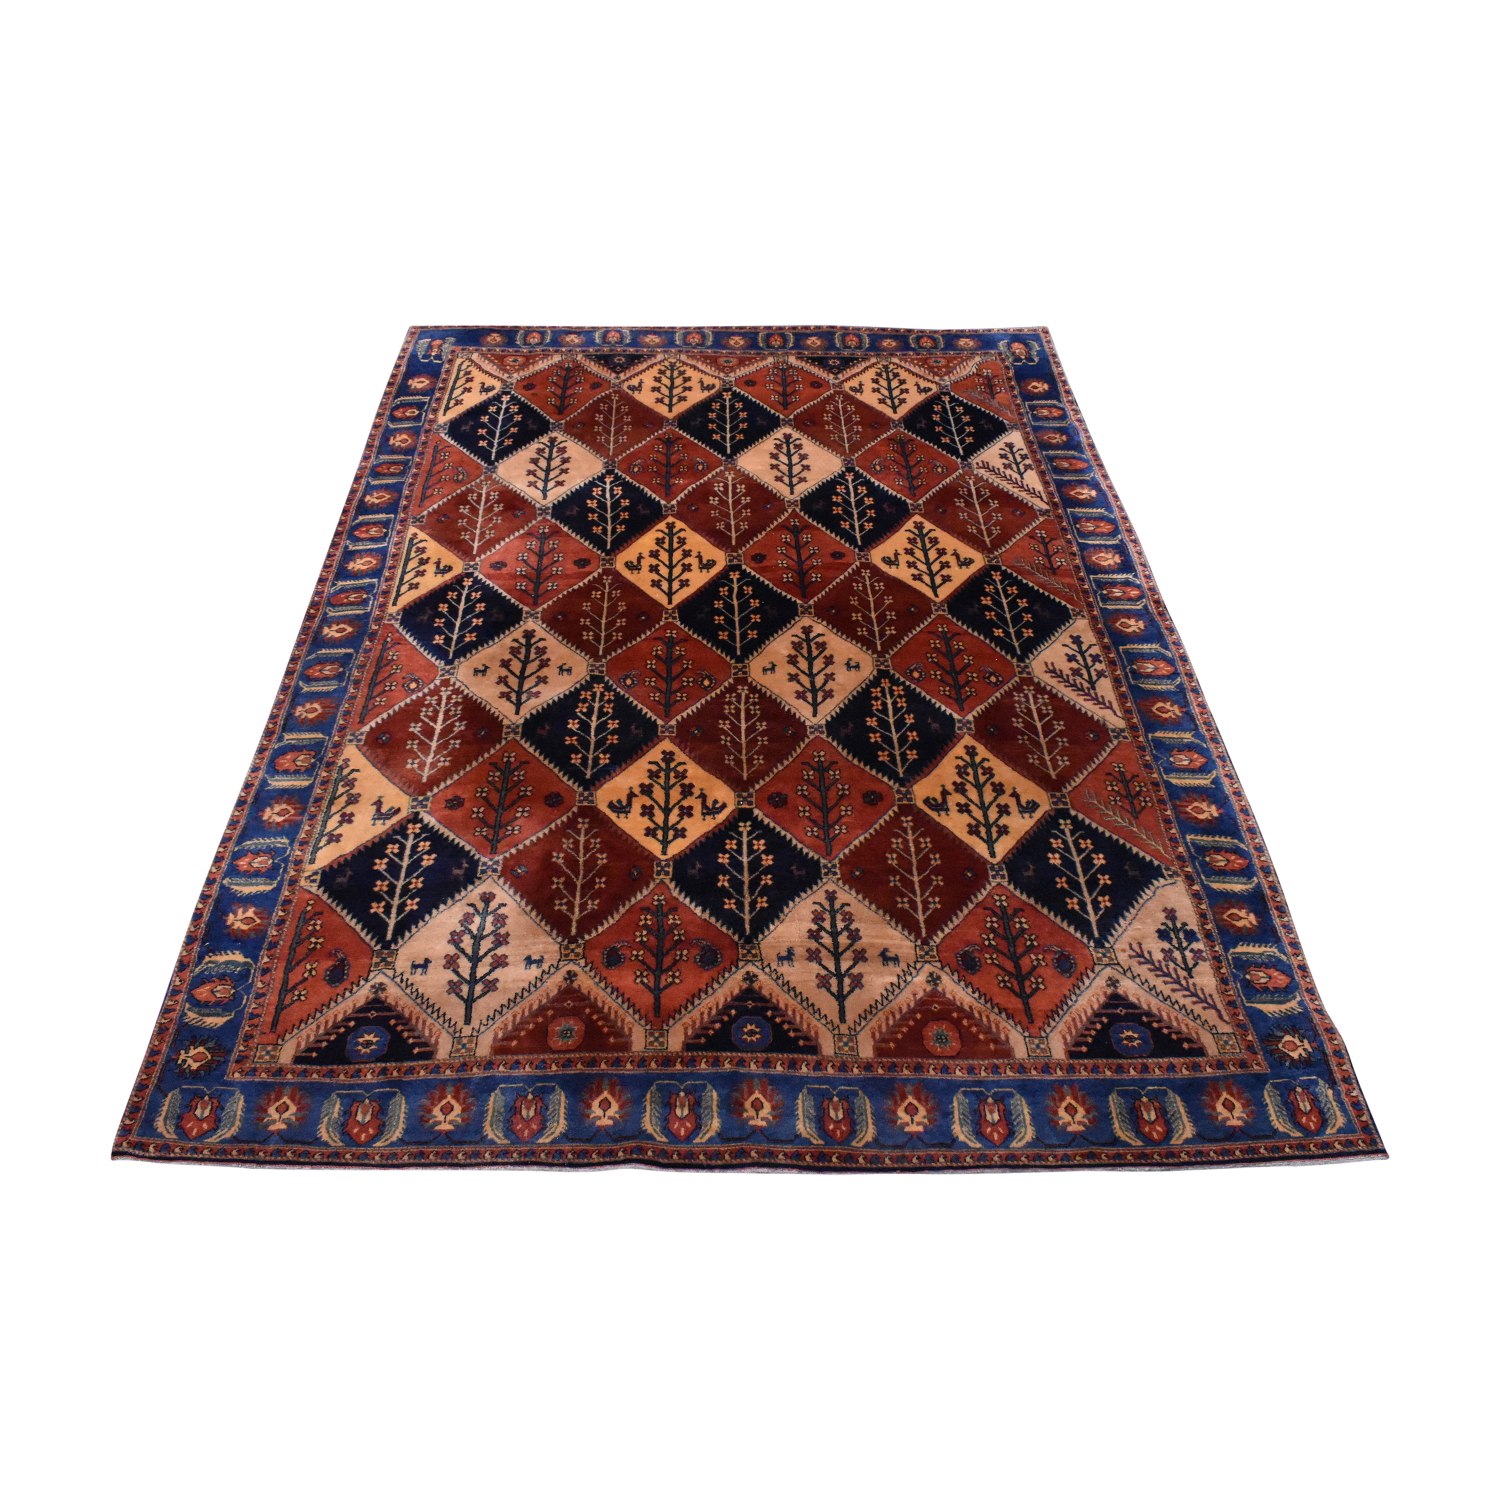 ABC Carpet & Home ABC Carpet & Home Oushak-Style Area Rug second hand